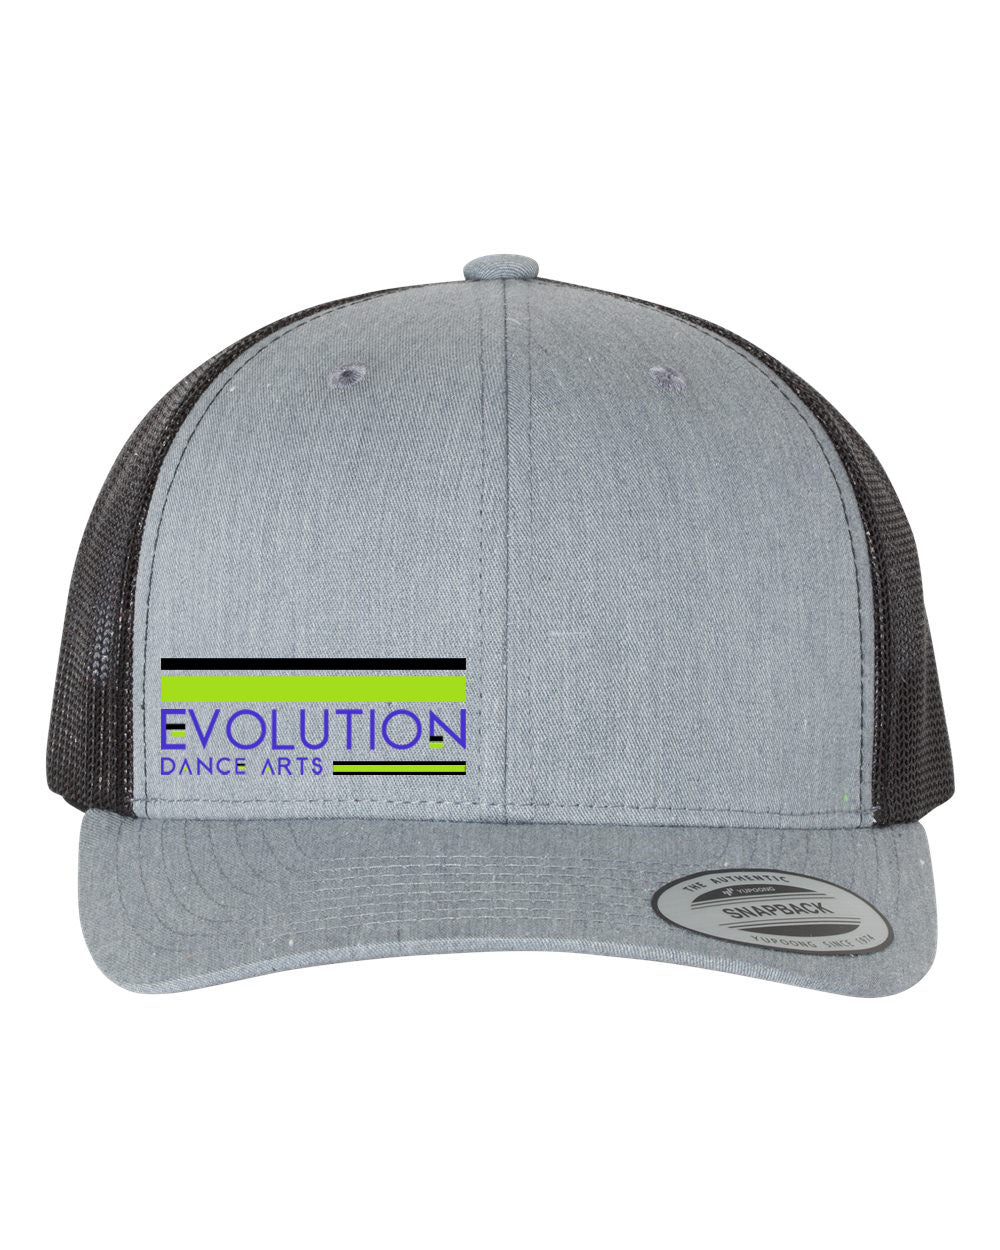 Evolution Dance Arts Design 3 Trucker Hat